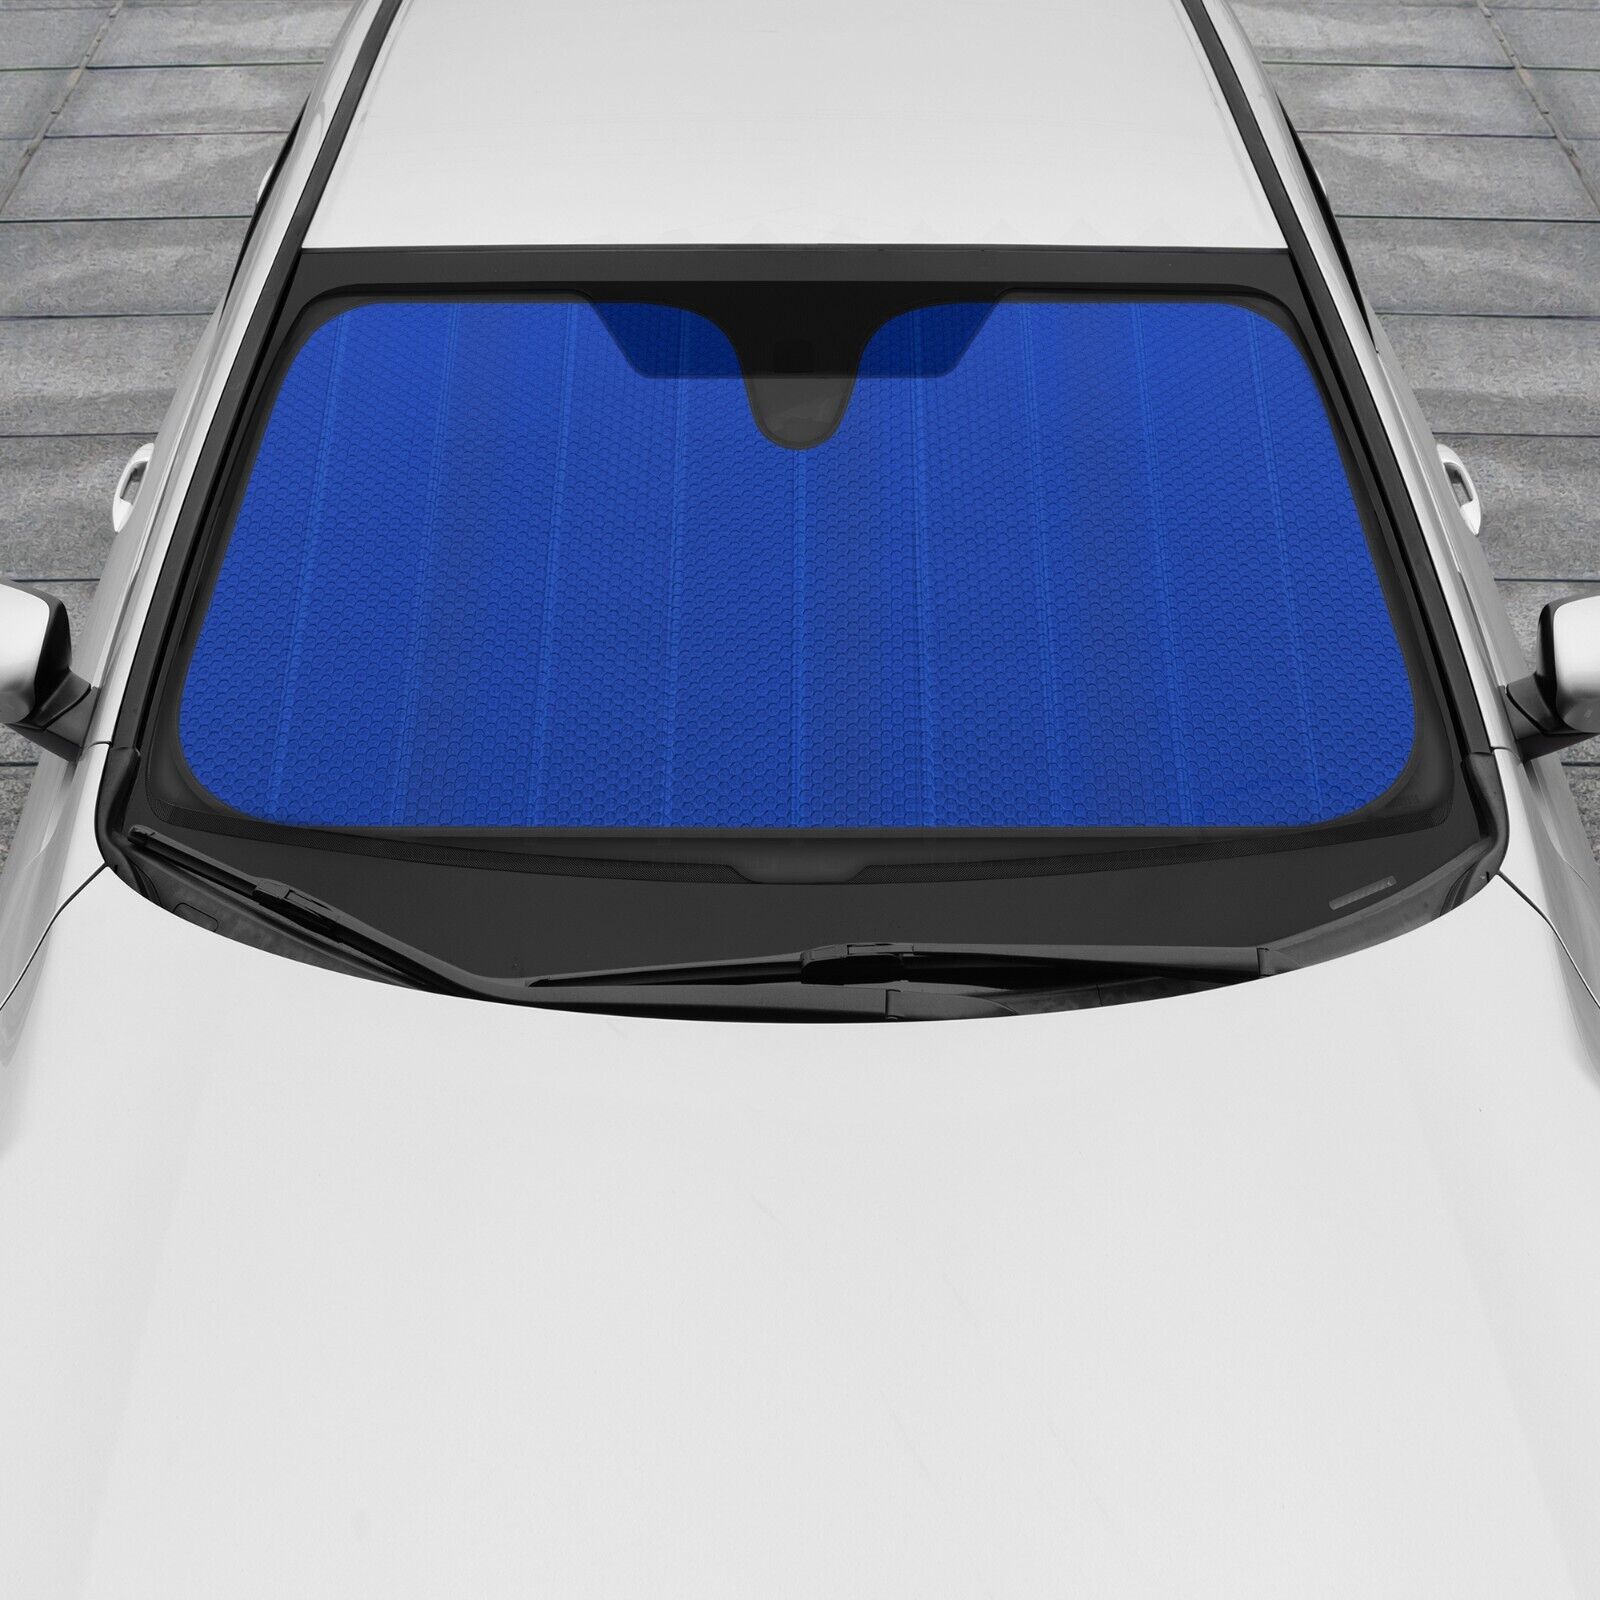 Auto Sunshade Blue Foil Reflective Windshield for Car Cover Visor Jumbo Size